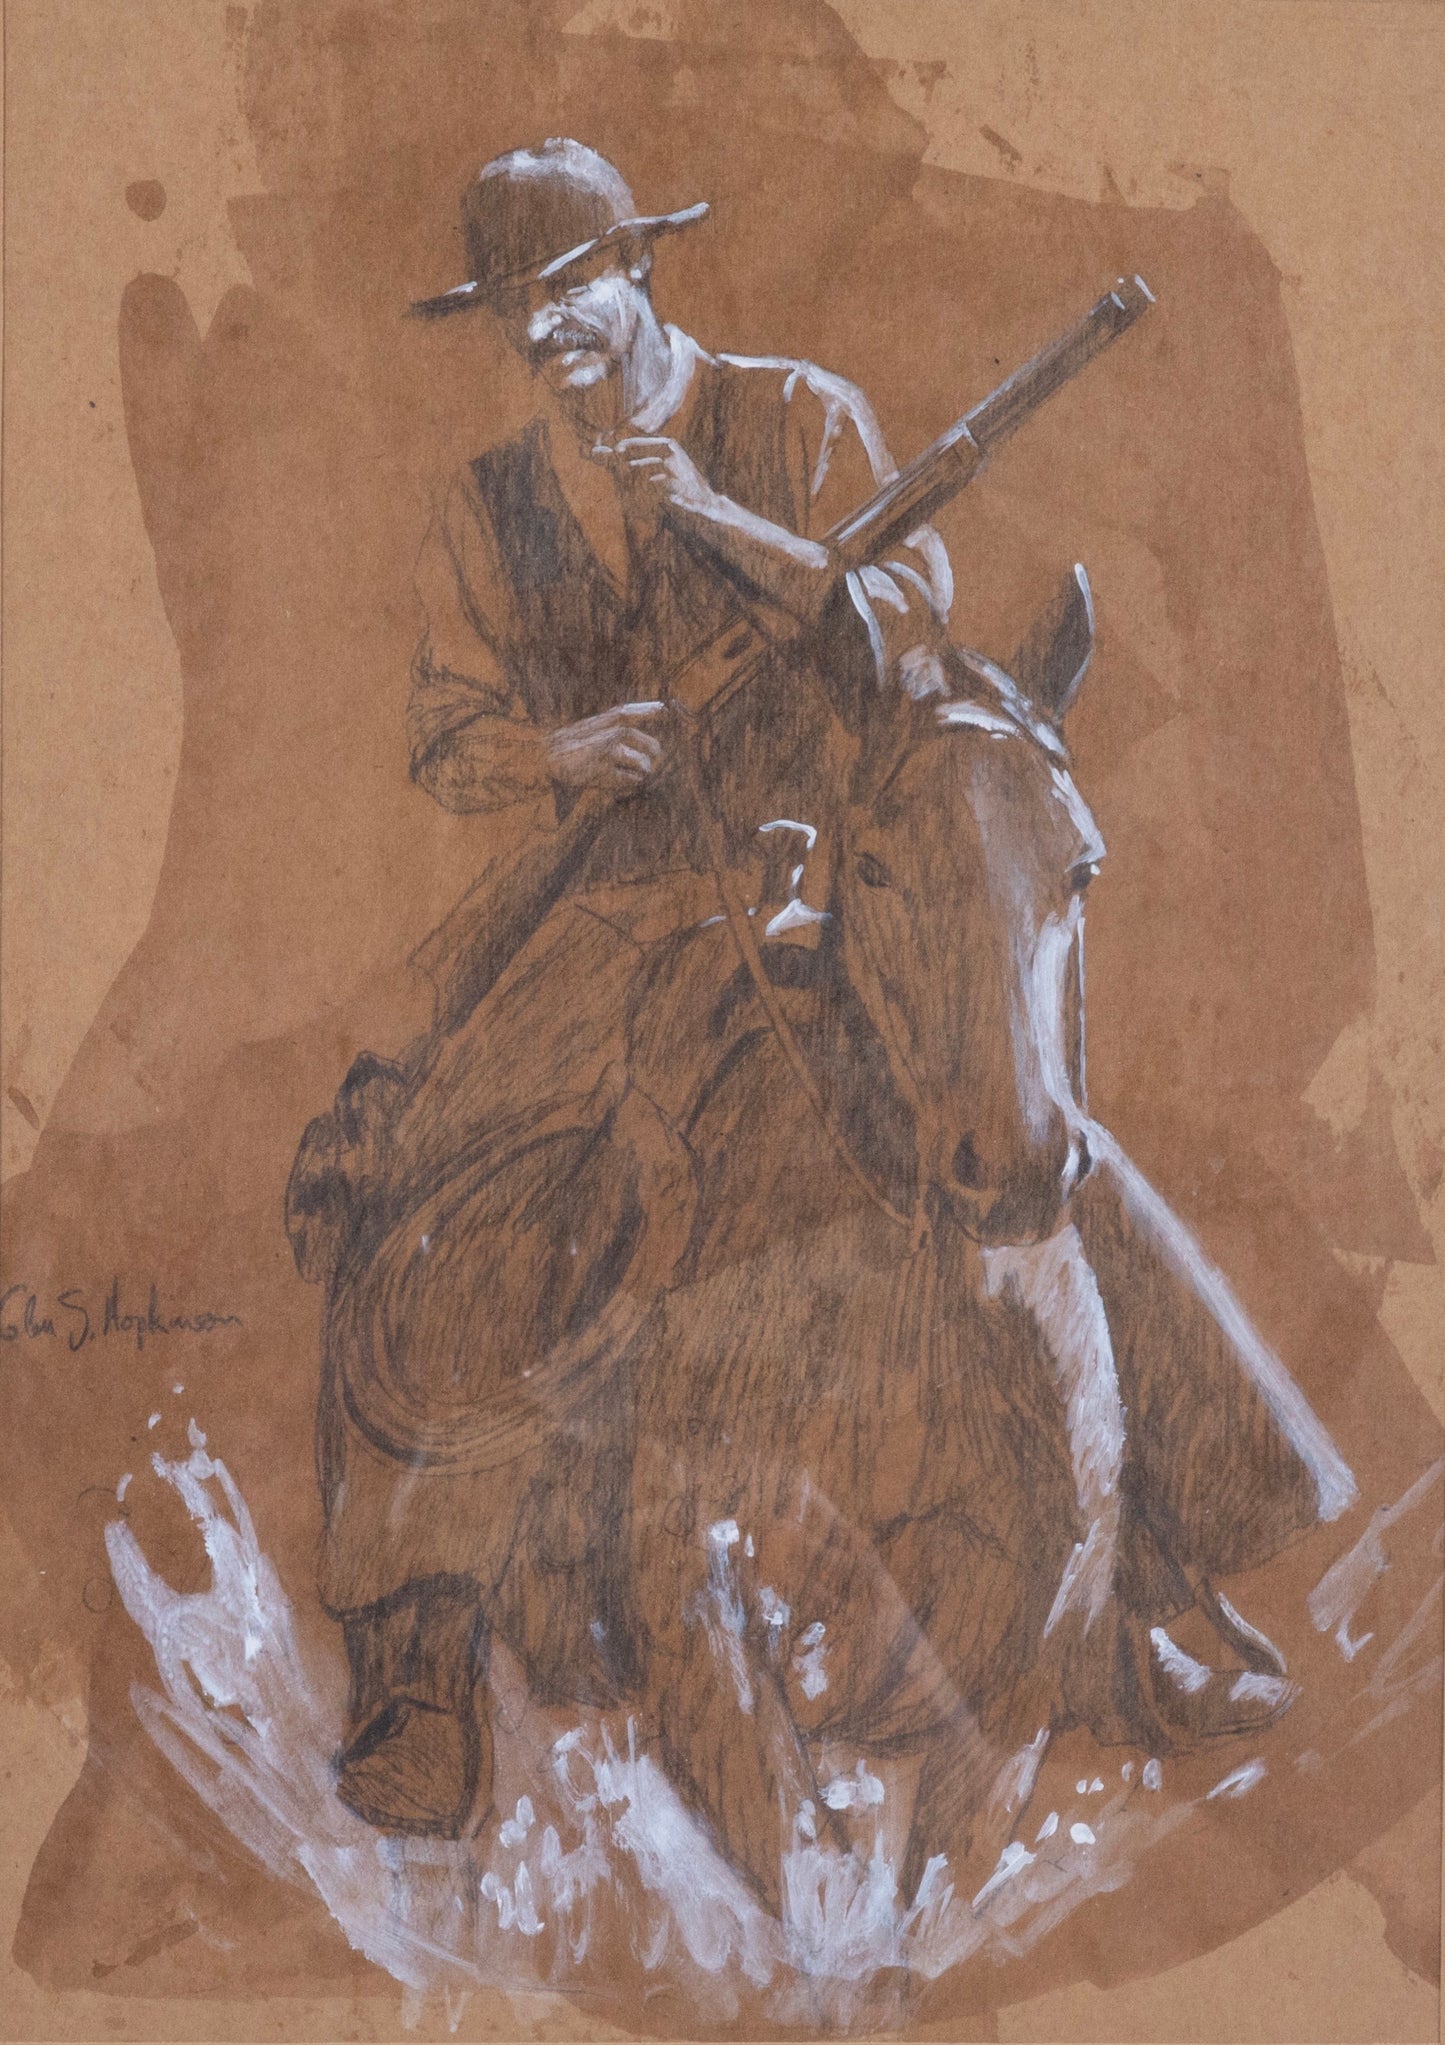 Glen S. Hopkinson - Cowboy and Horse 14" x 10"